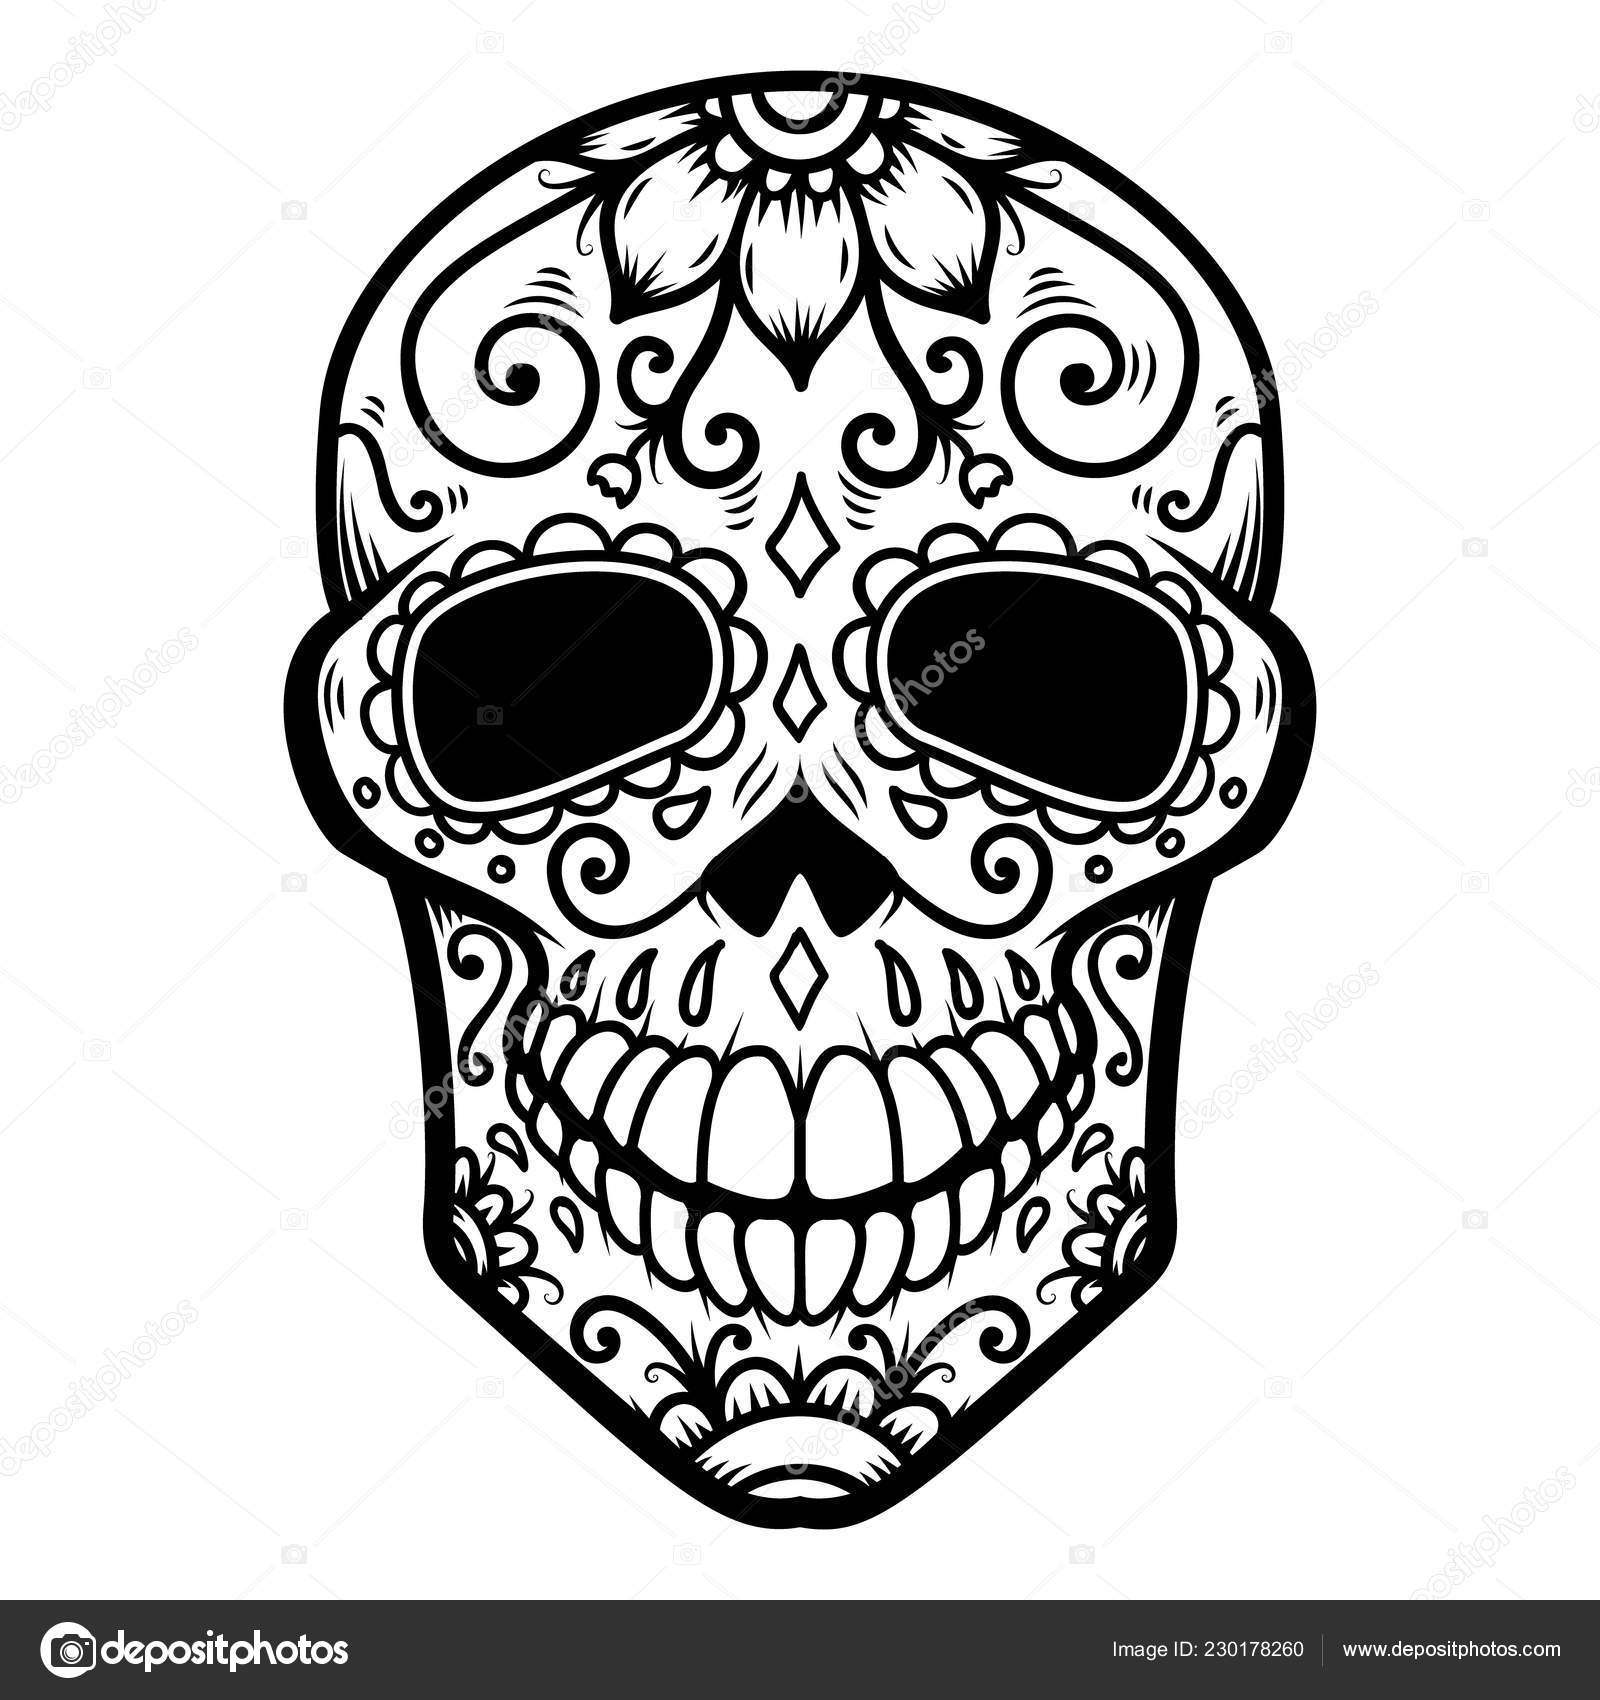 Black Half Skeleton Day of the Dead Skull Mask with Designs 